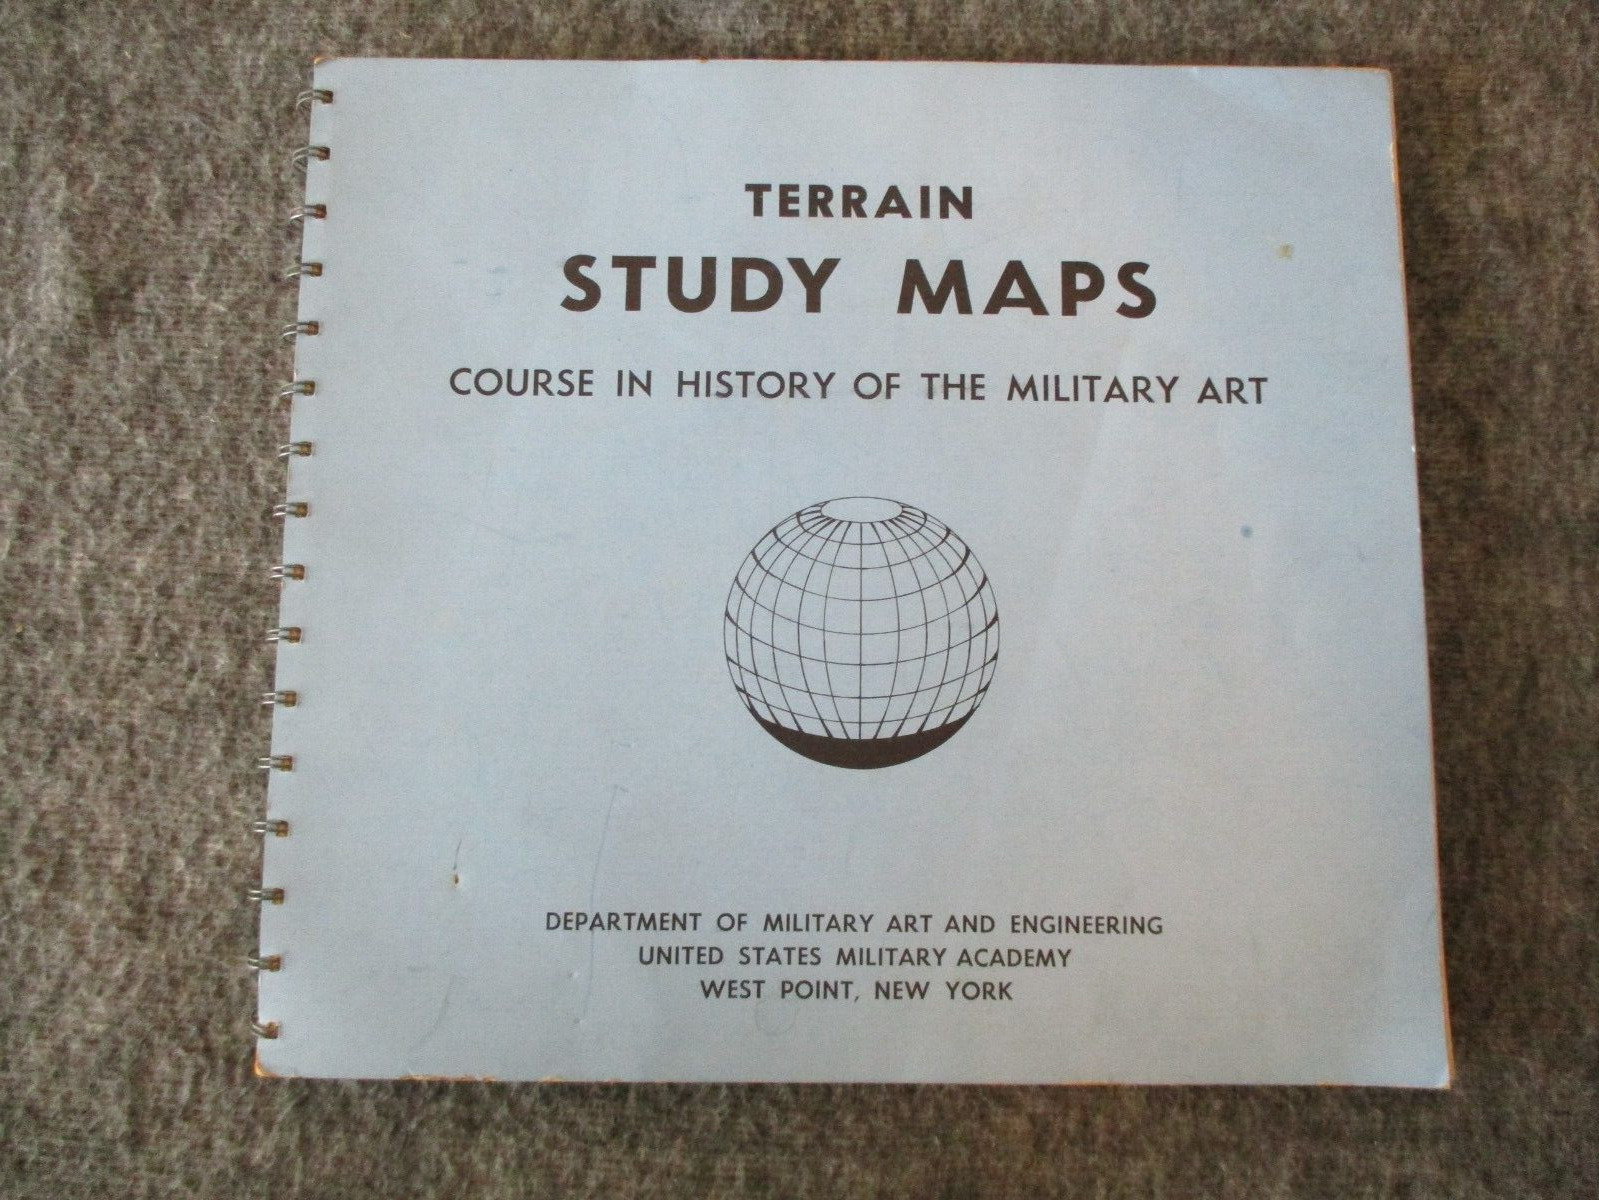 1960s TERRAIN STUDY MAPS VIETNAM ERA WEST POINT COURSE-HISTORY MILITARY ART BOOK